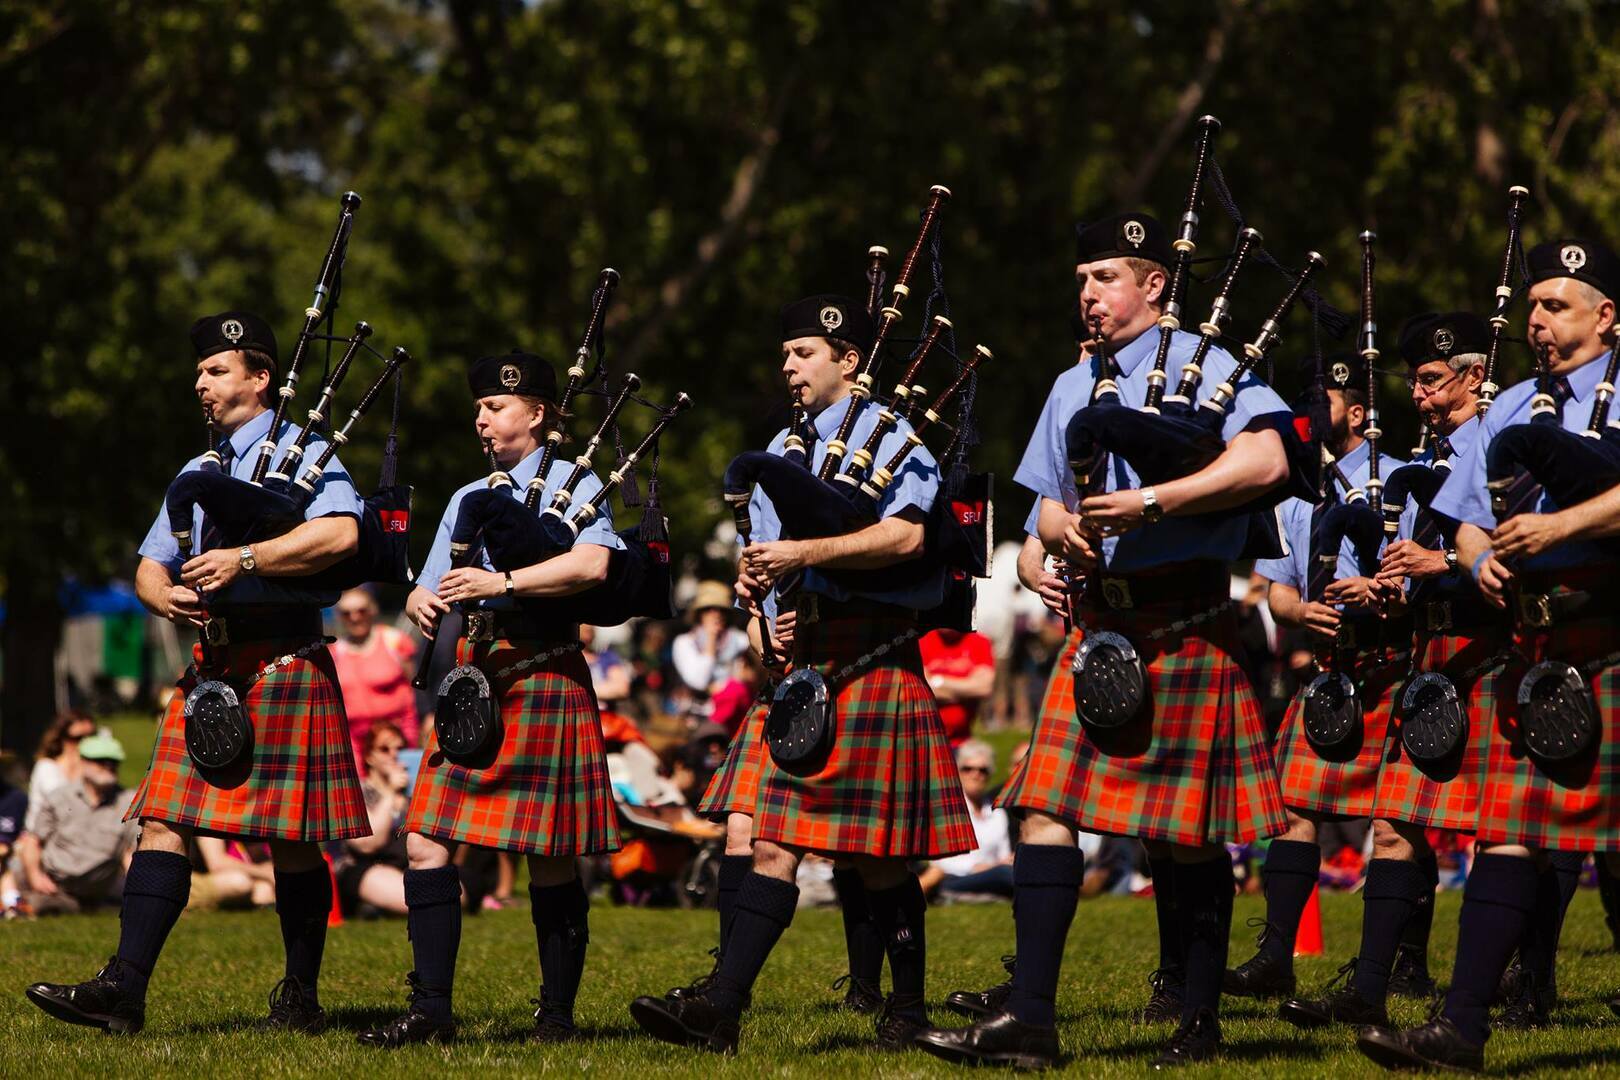 161st Victoria Highland Games and Celtic Festival, Victoria, British Columbia, Canada